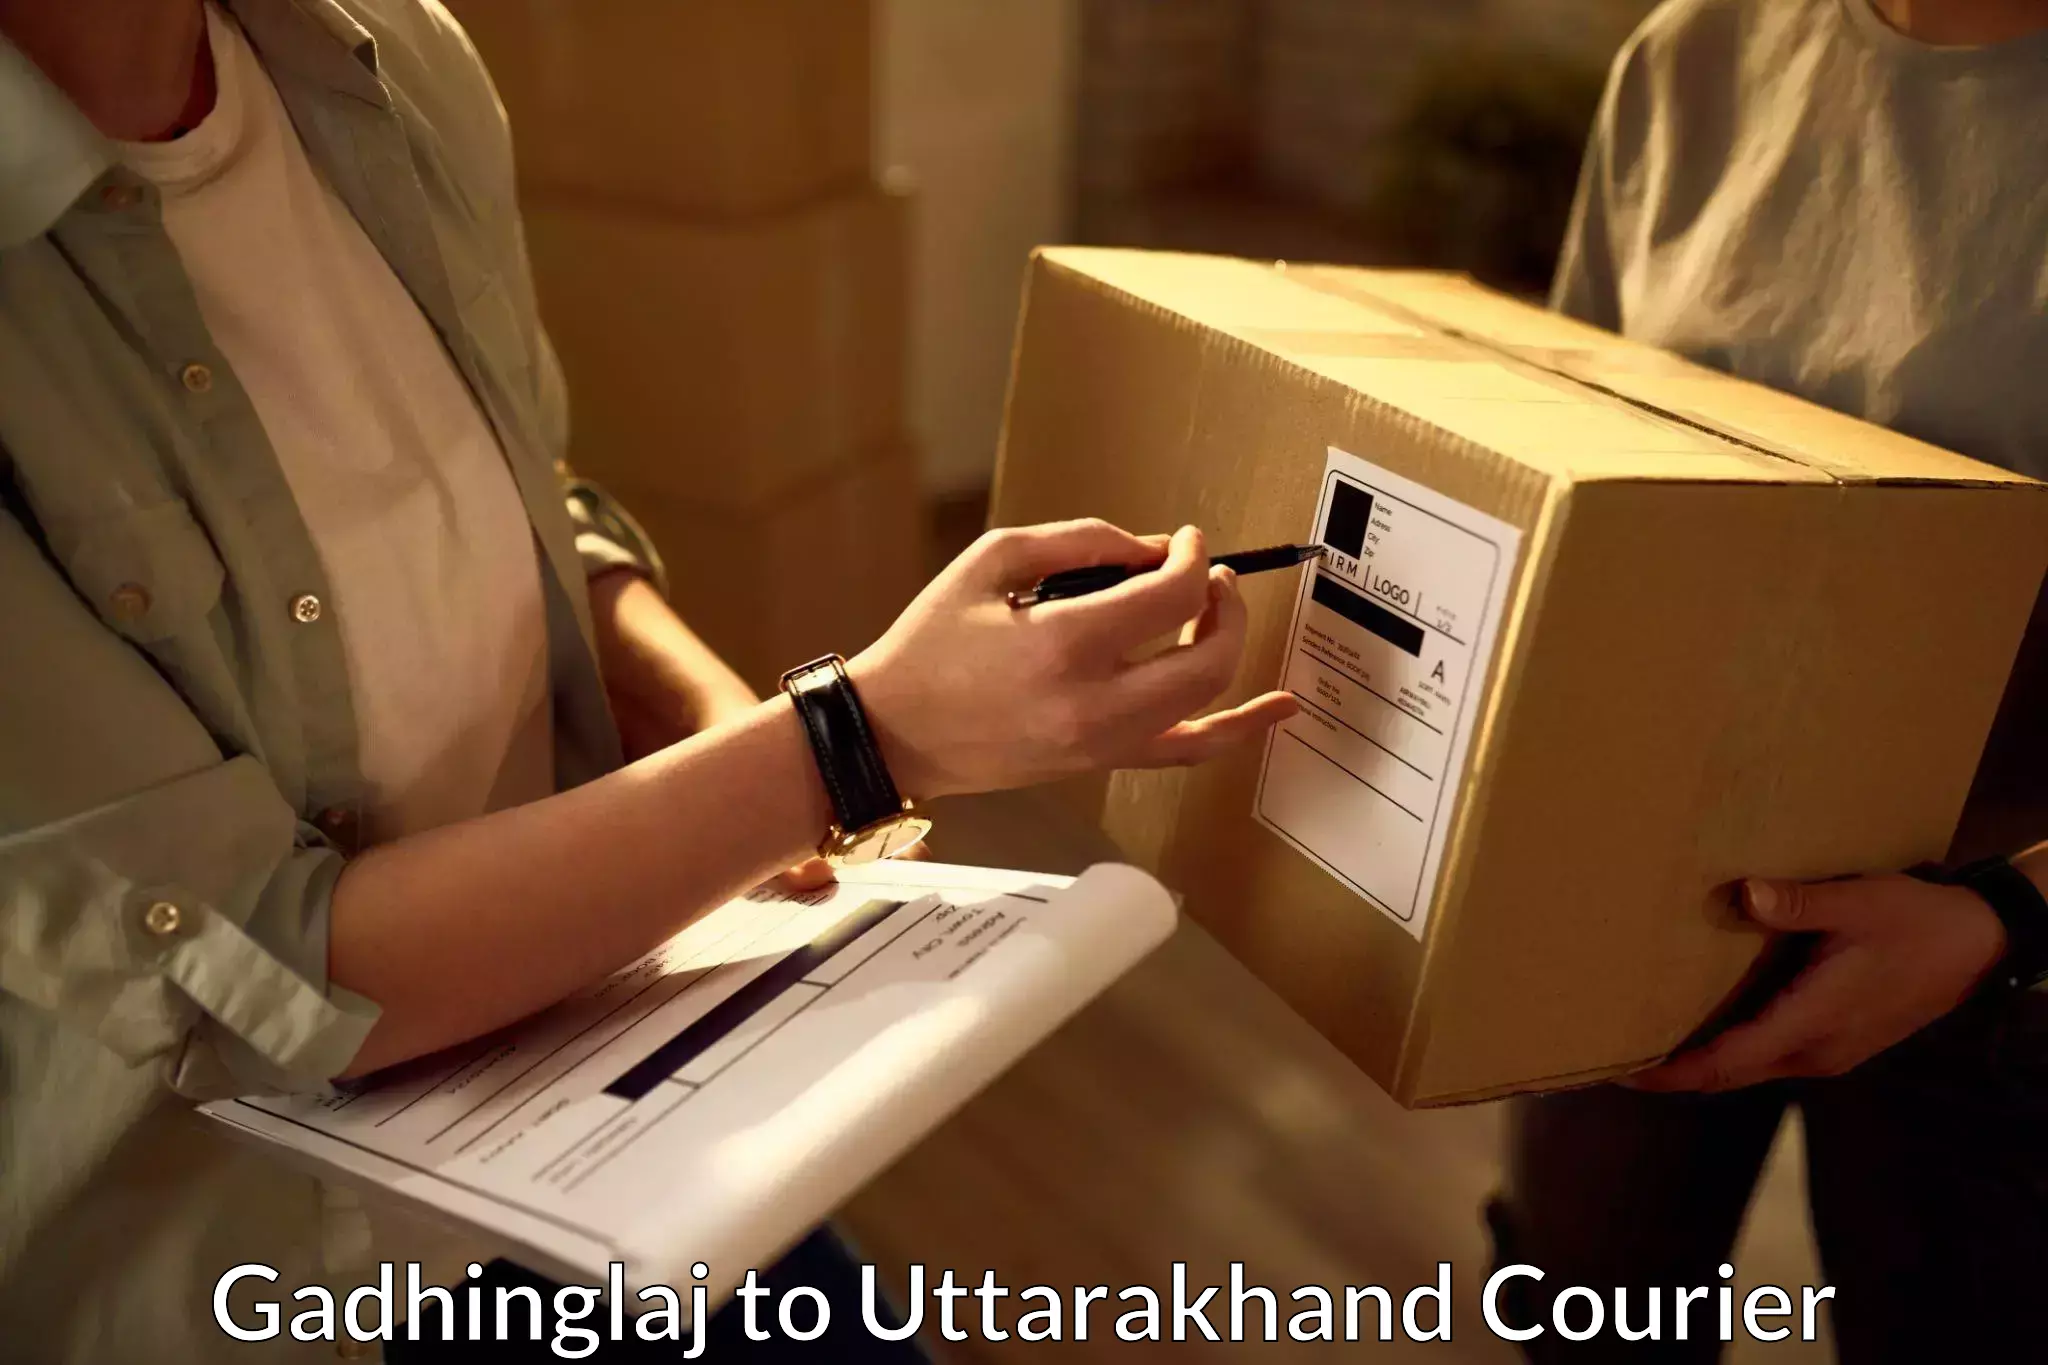 Global delivery options Gadhinglaj to Tehri Garhwal